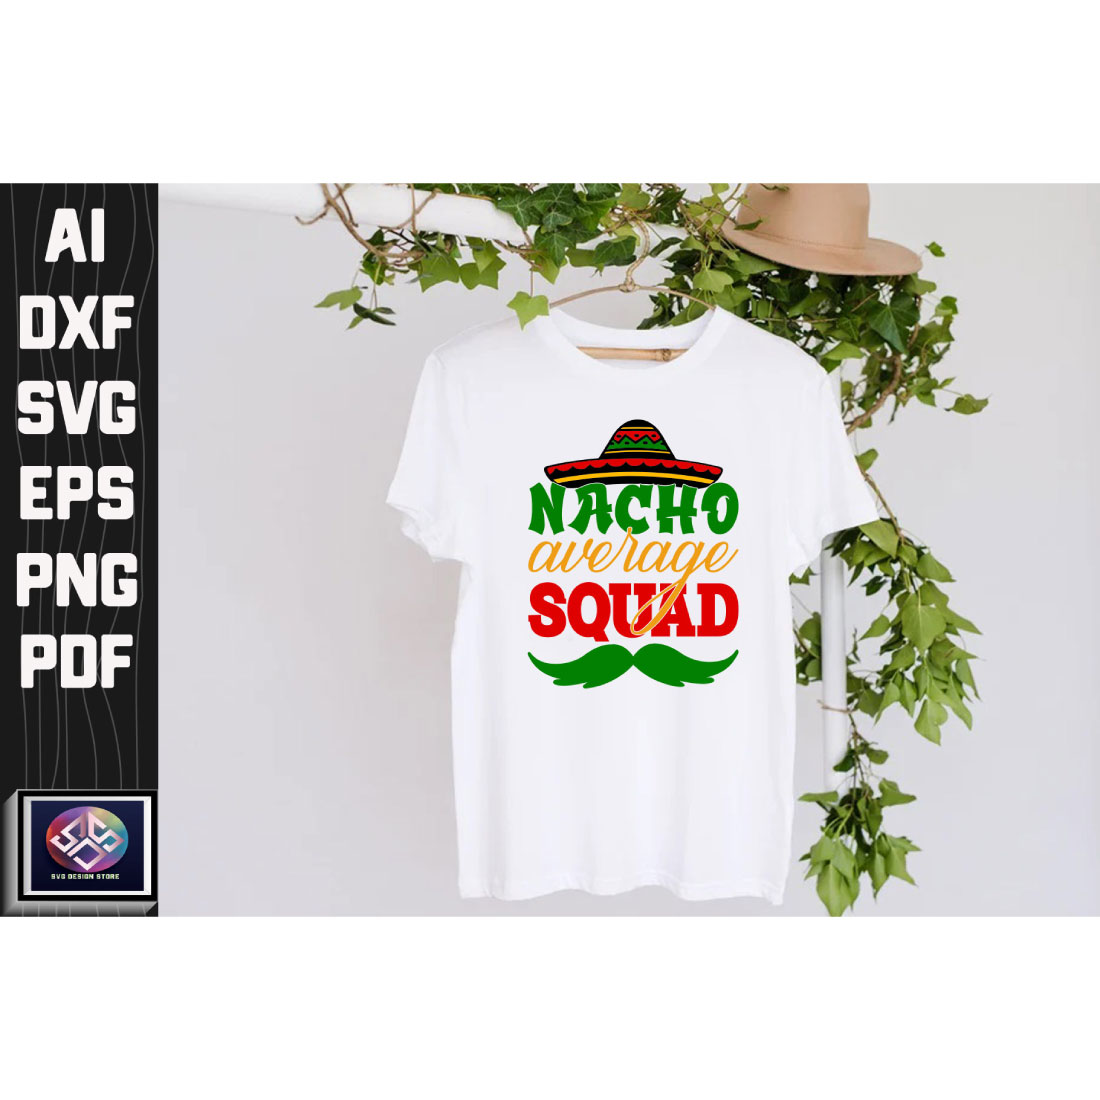 Nacho Average Squad preview image.